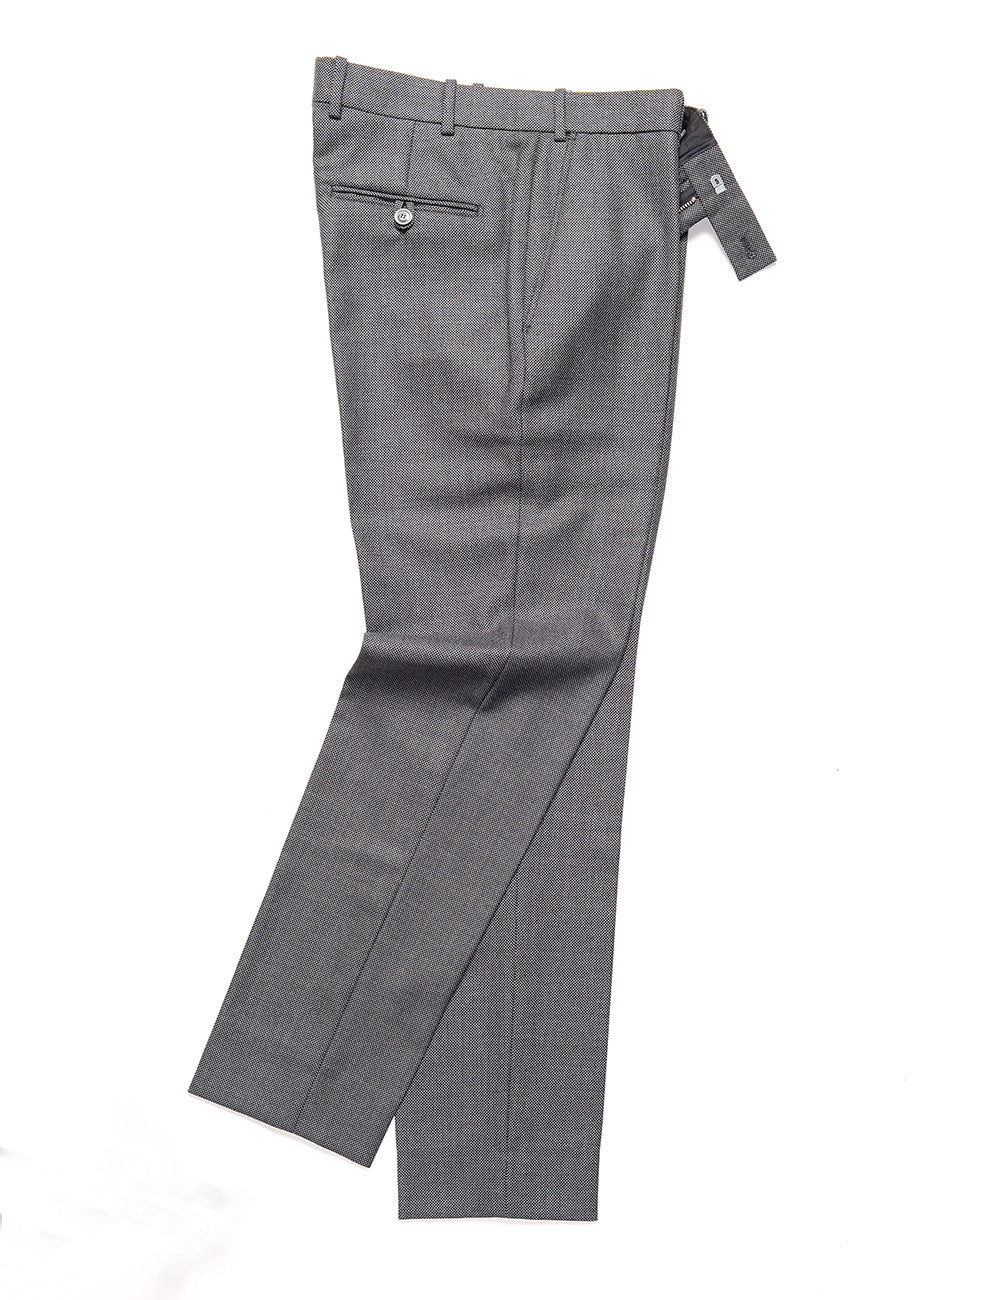 Brooklyn tailors BKT50 Tailored Trousers in Birdseye Weave - Storm Gray full length flat shot